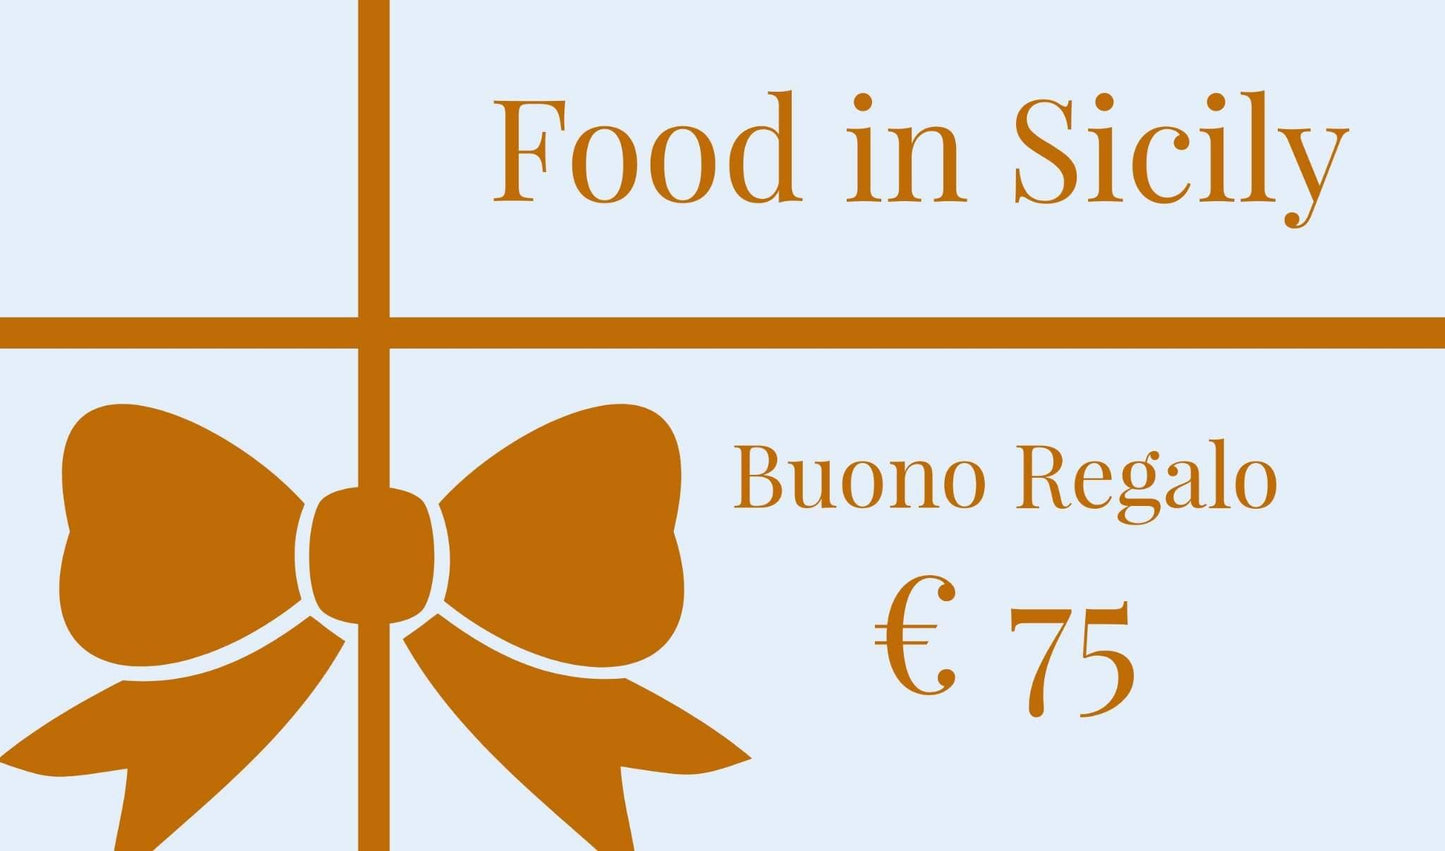 Buono Regalo Food in Sicily Buono Regalo Food in Sicily 75,00 € 